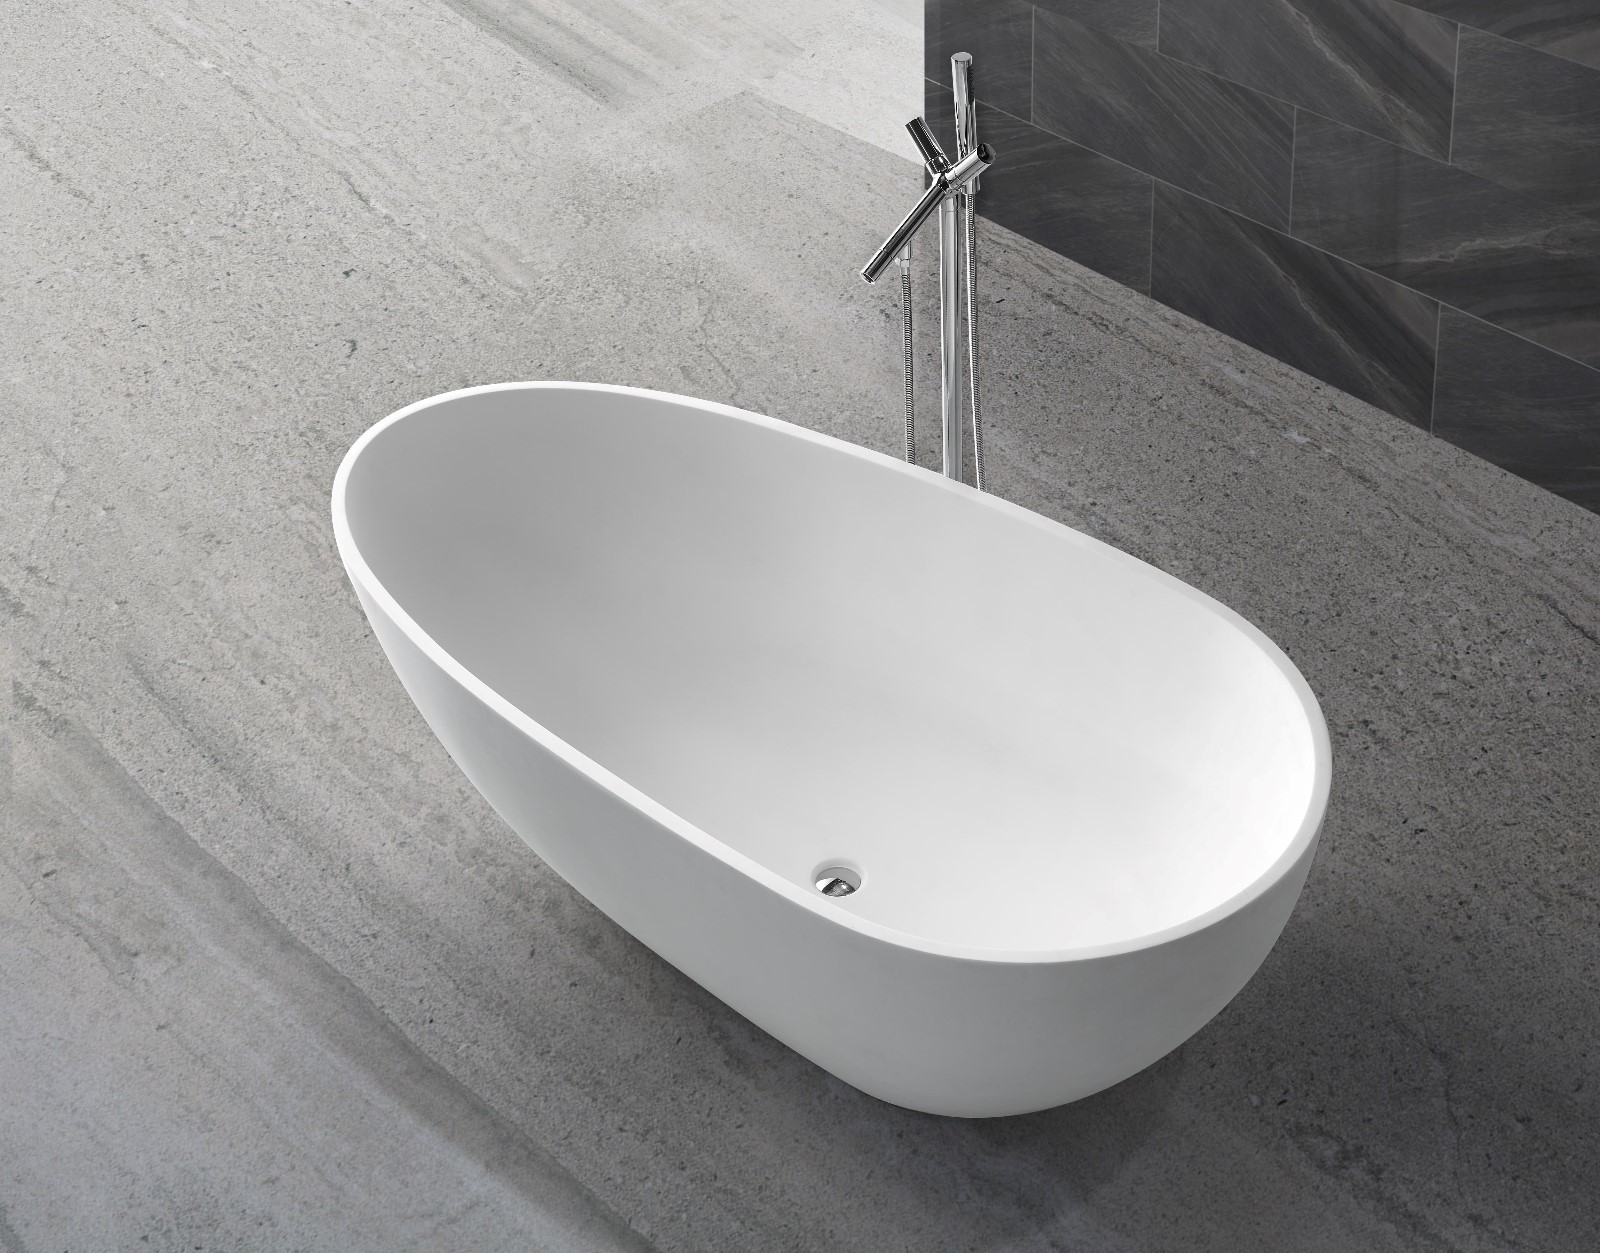 KingKonree Brand kkr atrifial 1800mm custom Solid Surface Freestanding Bathtub